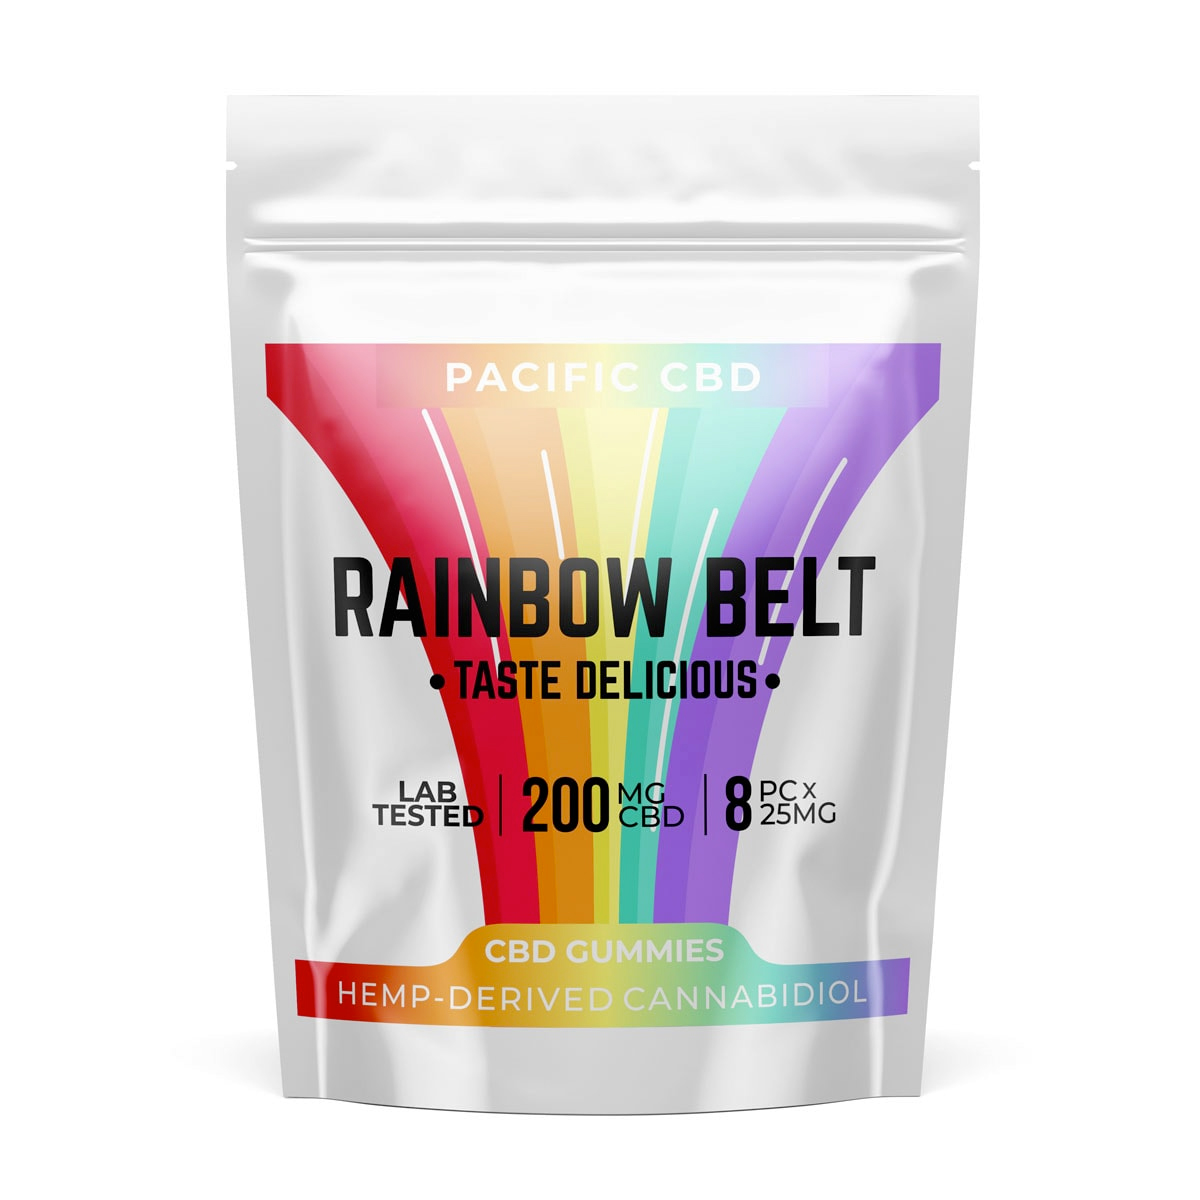 Buy Pacific CBD Rainbow Belt 200mg